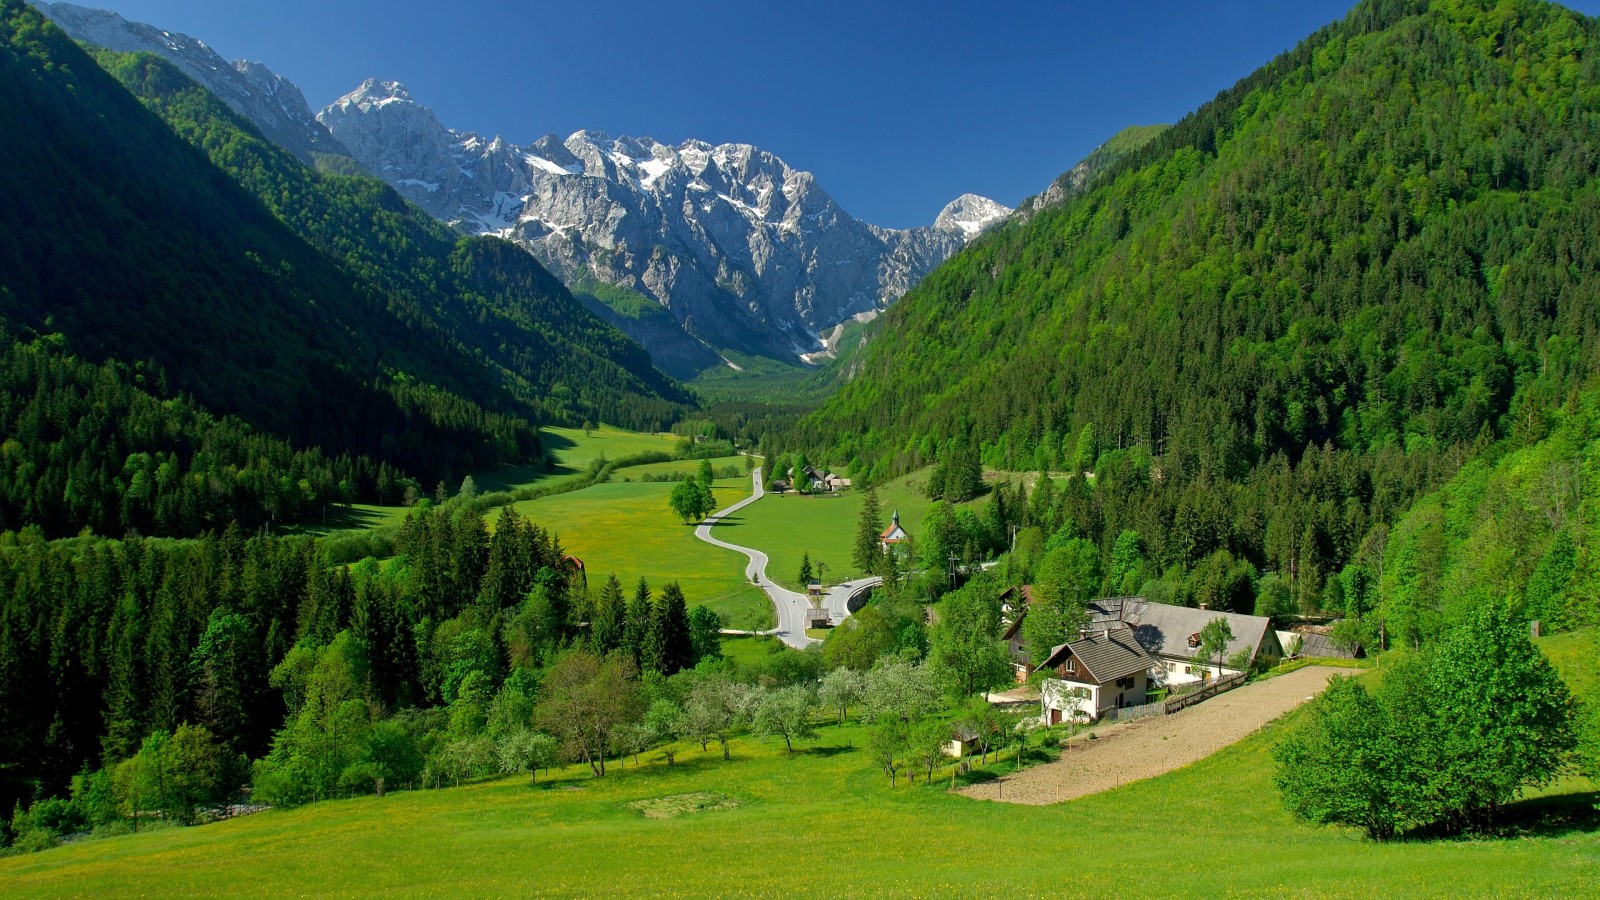 Spring In The Alpine Valley Wallpaper for Desktop 1600x900